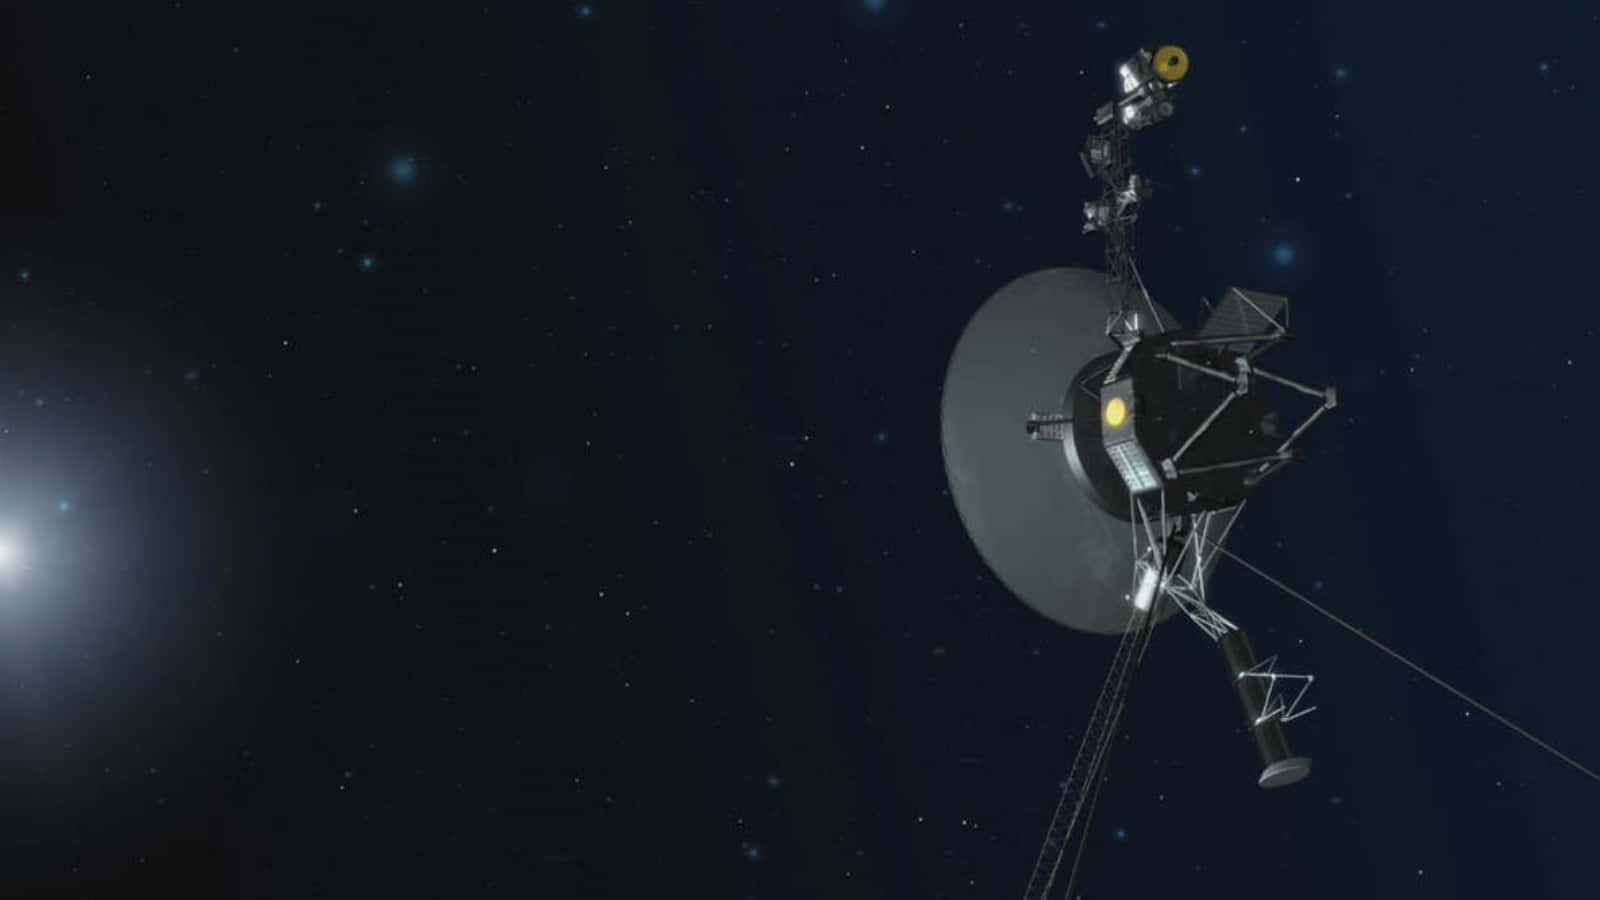 Award winning documentary showcasing the journey of NASA's Voyager spacecraft